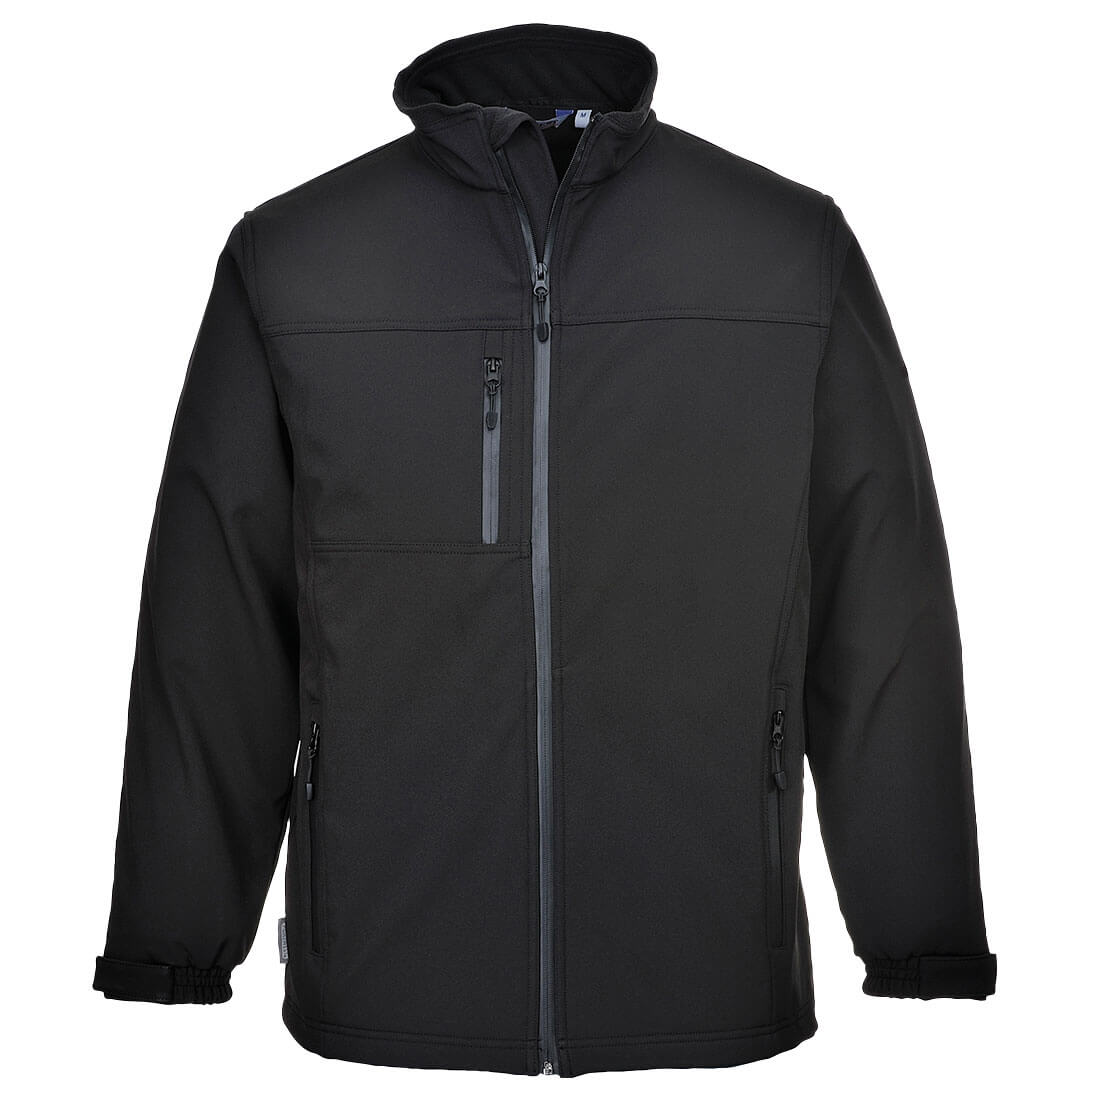 Portwest TK50 Black Sz 3XL Softshell Jacket Microfleece Coat Waterproof Breathable Work